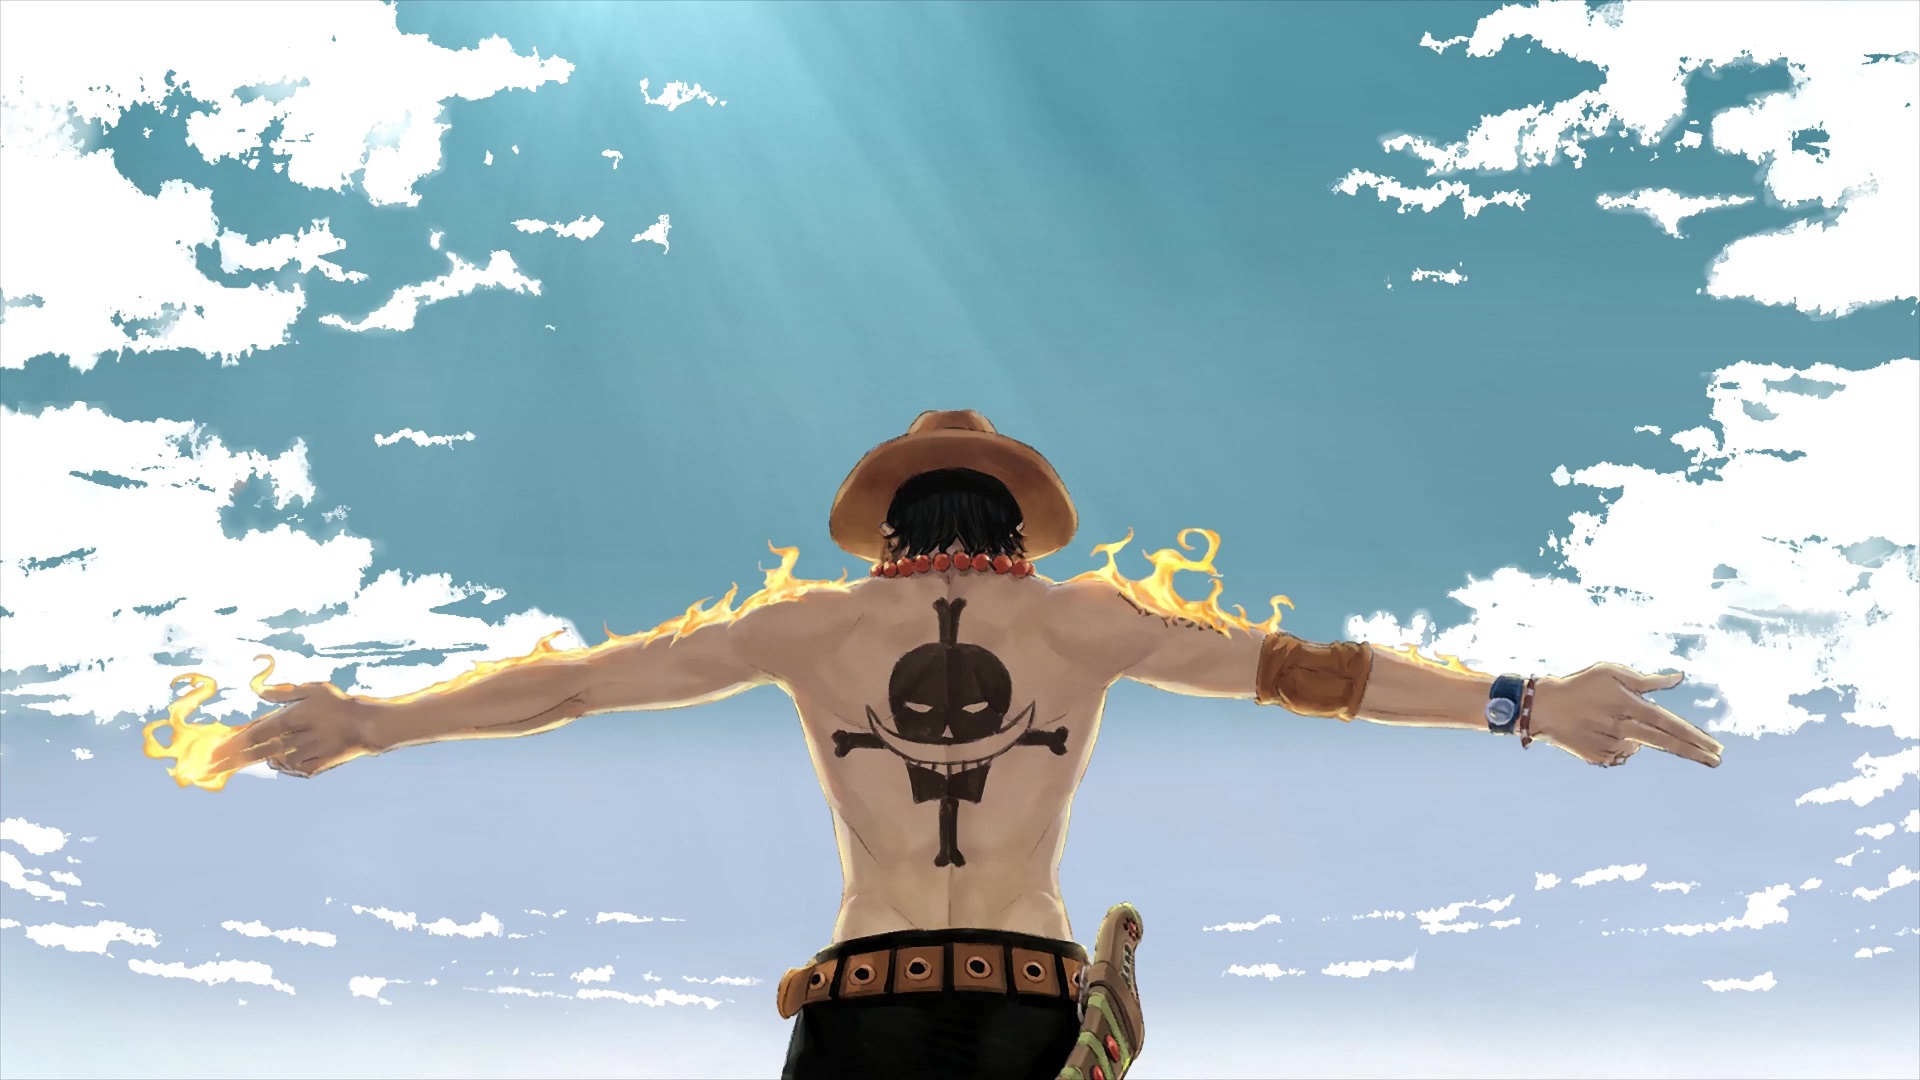 Fire Fist Ace Portgas D. One Piece Live Wallpaper - MoeWalls